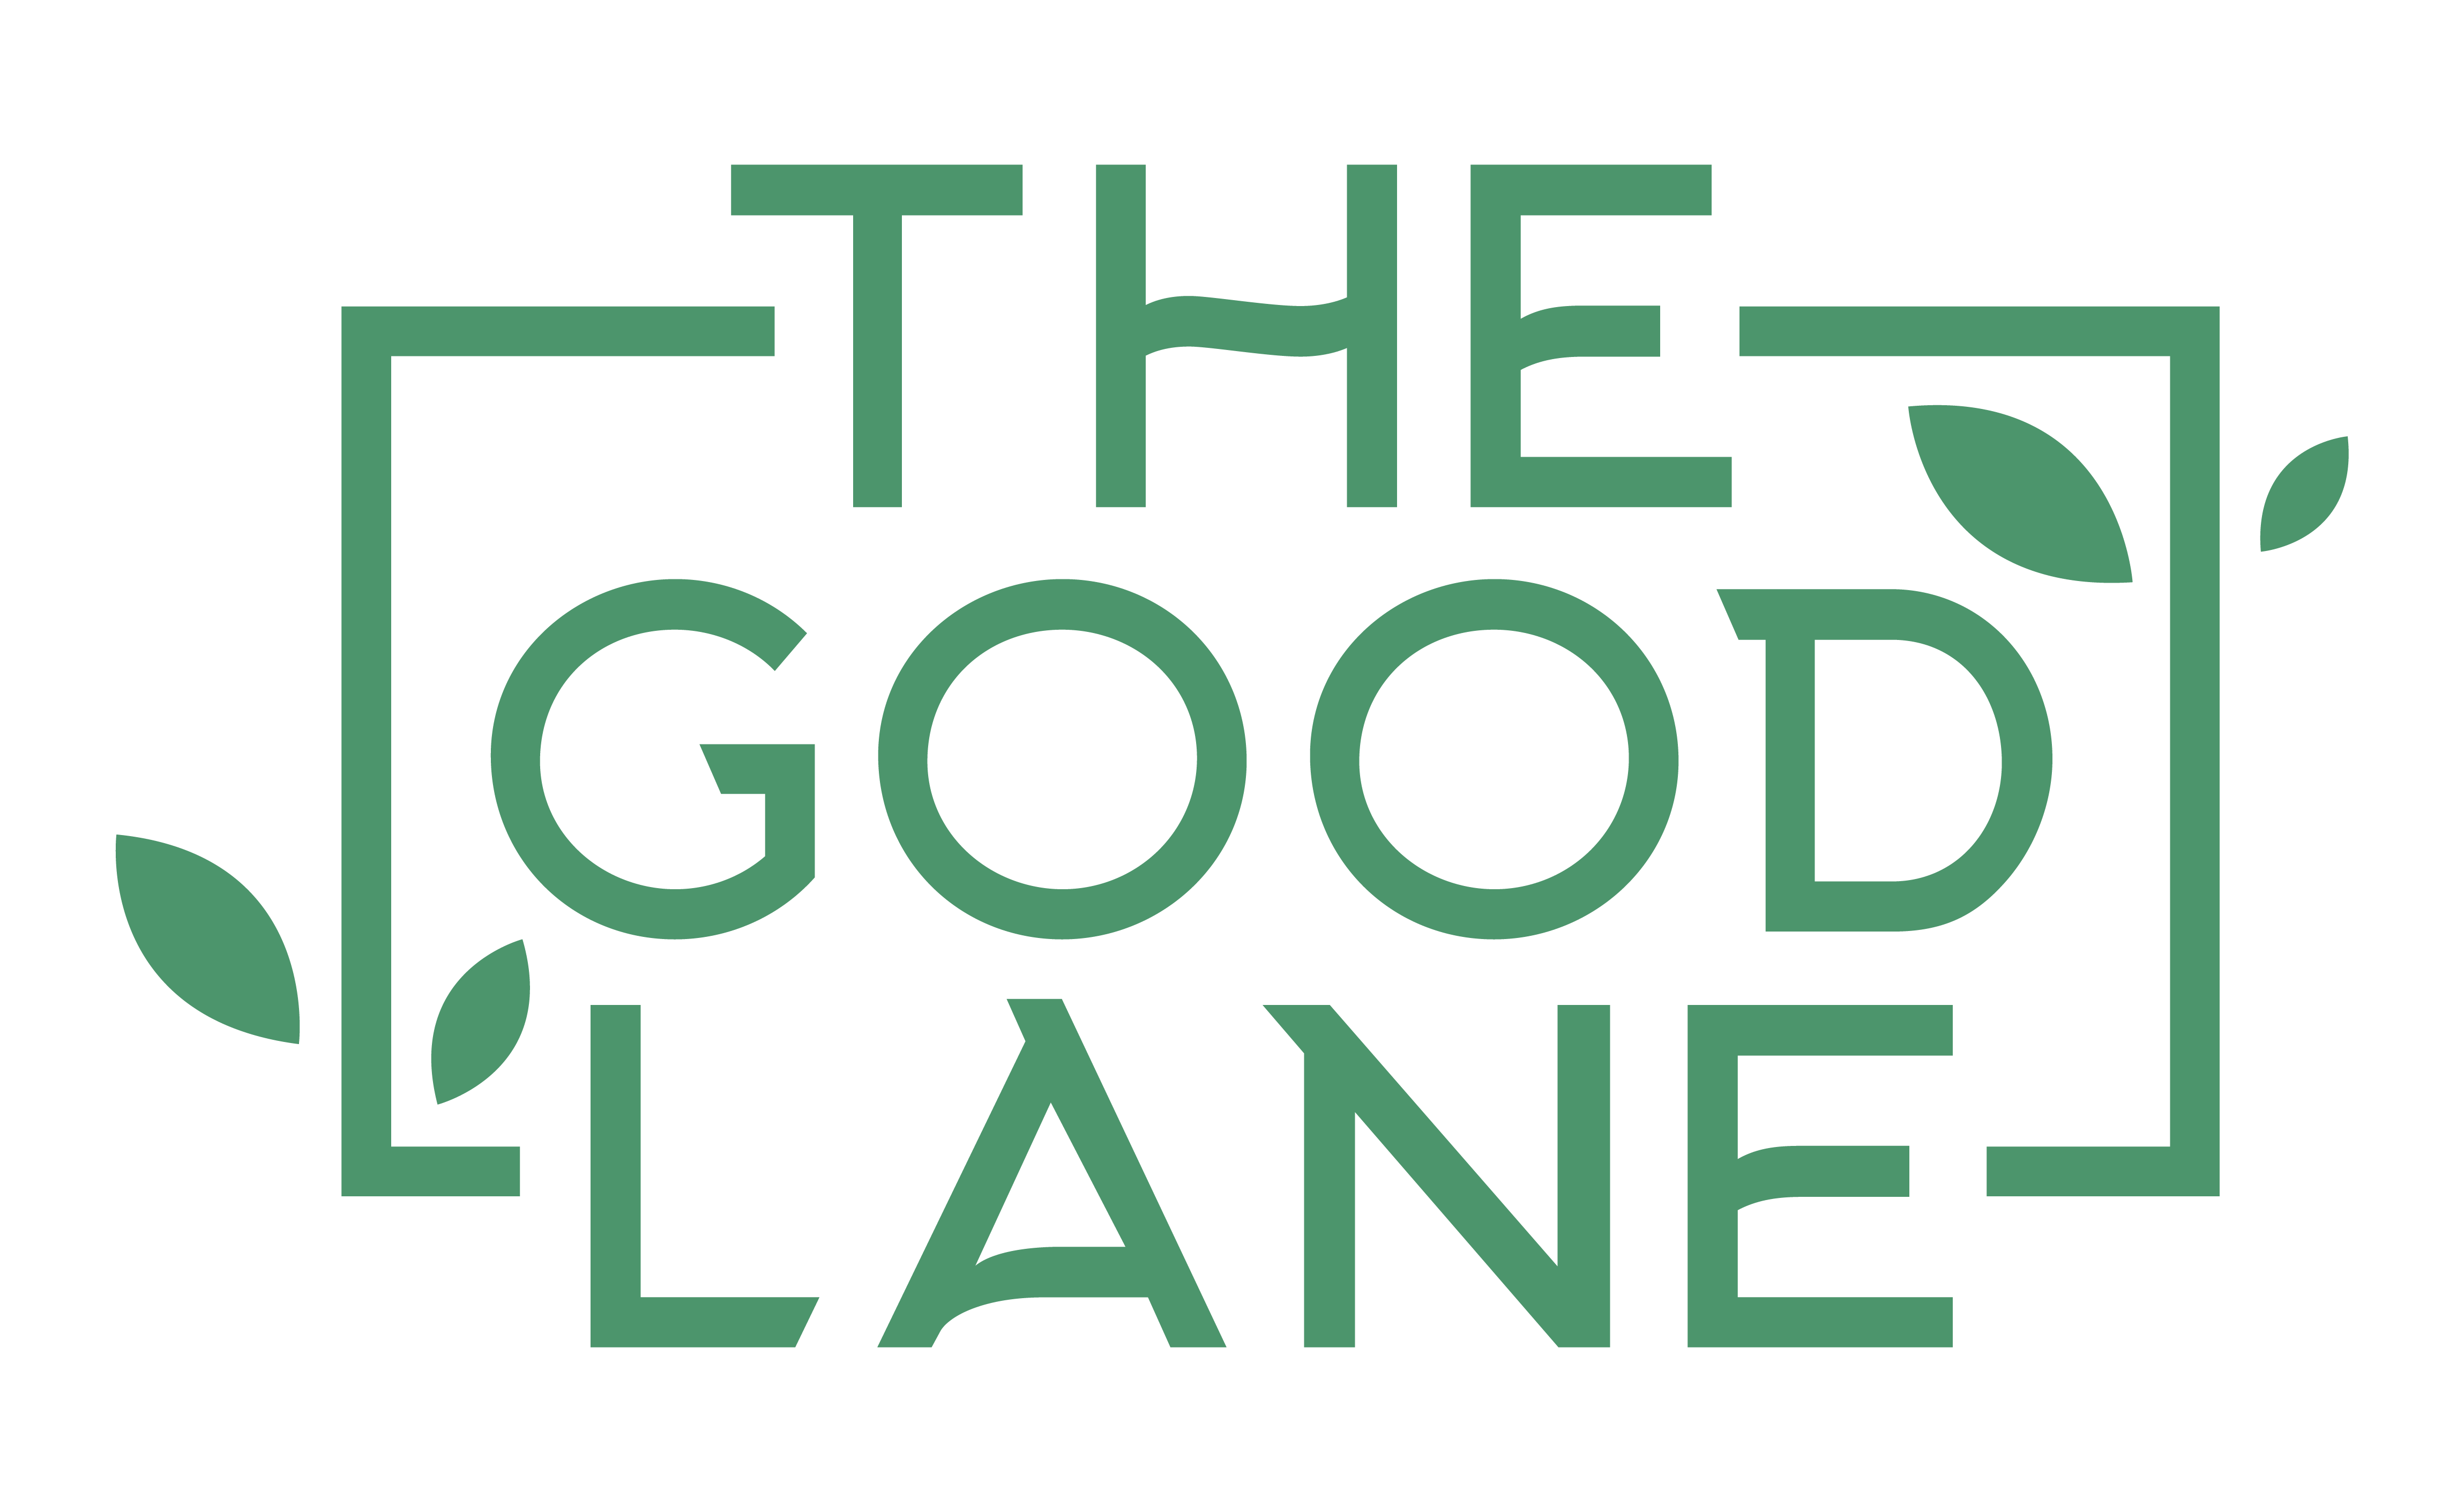 The Good Lane